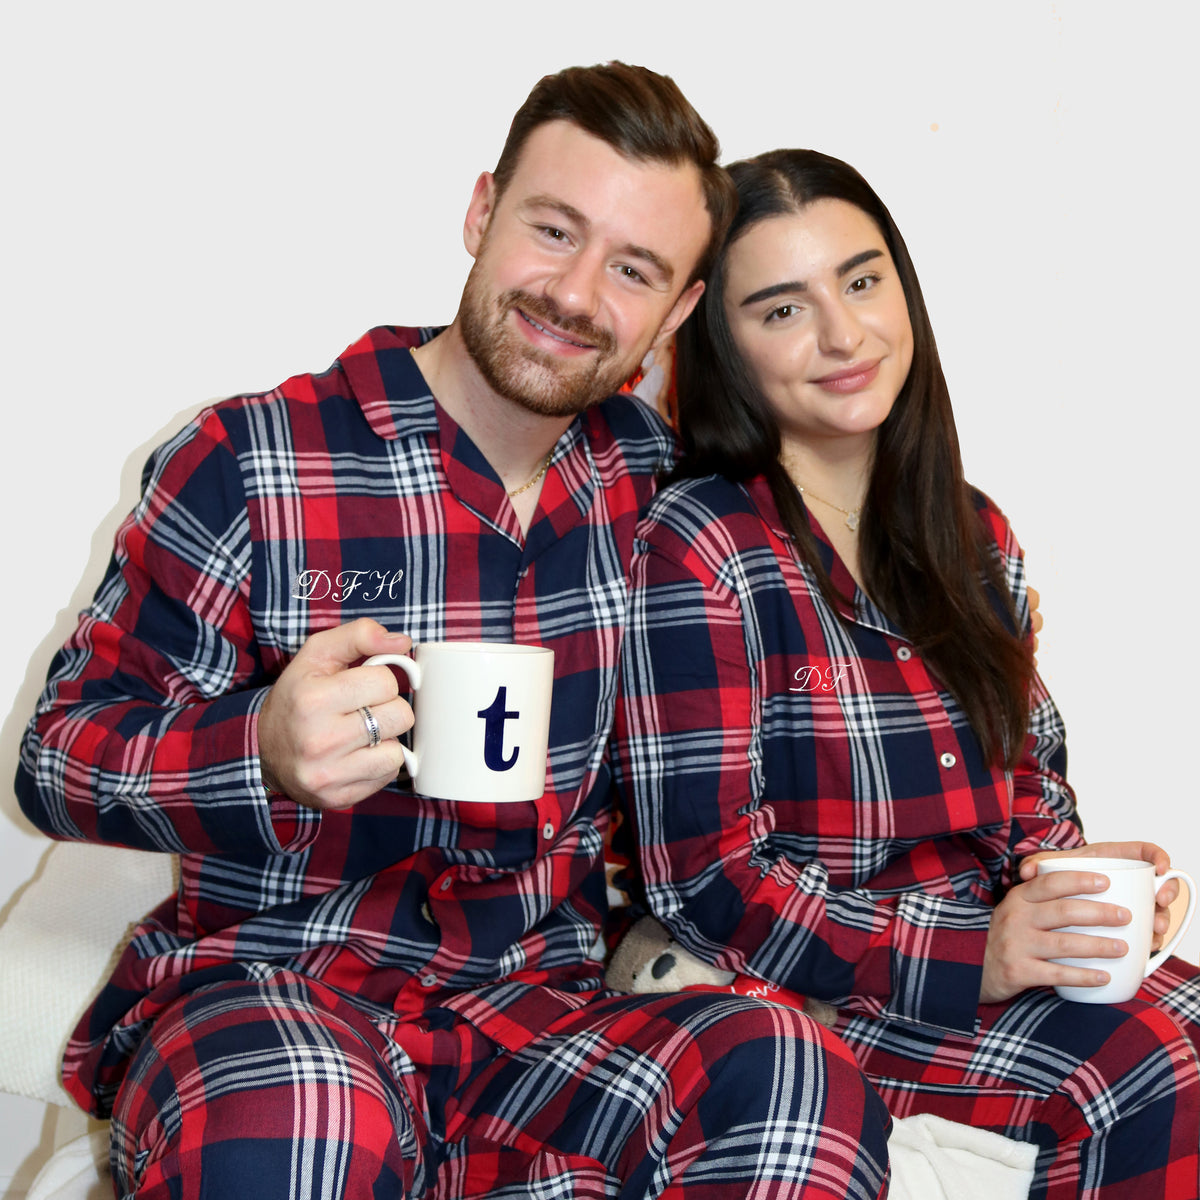 Mens Personalised Pyjamas